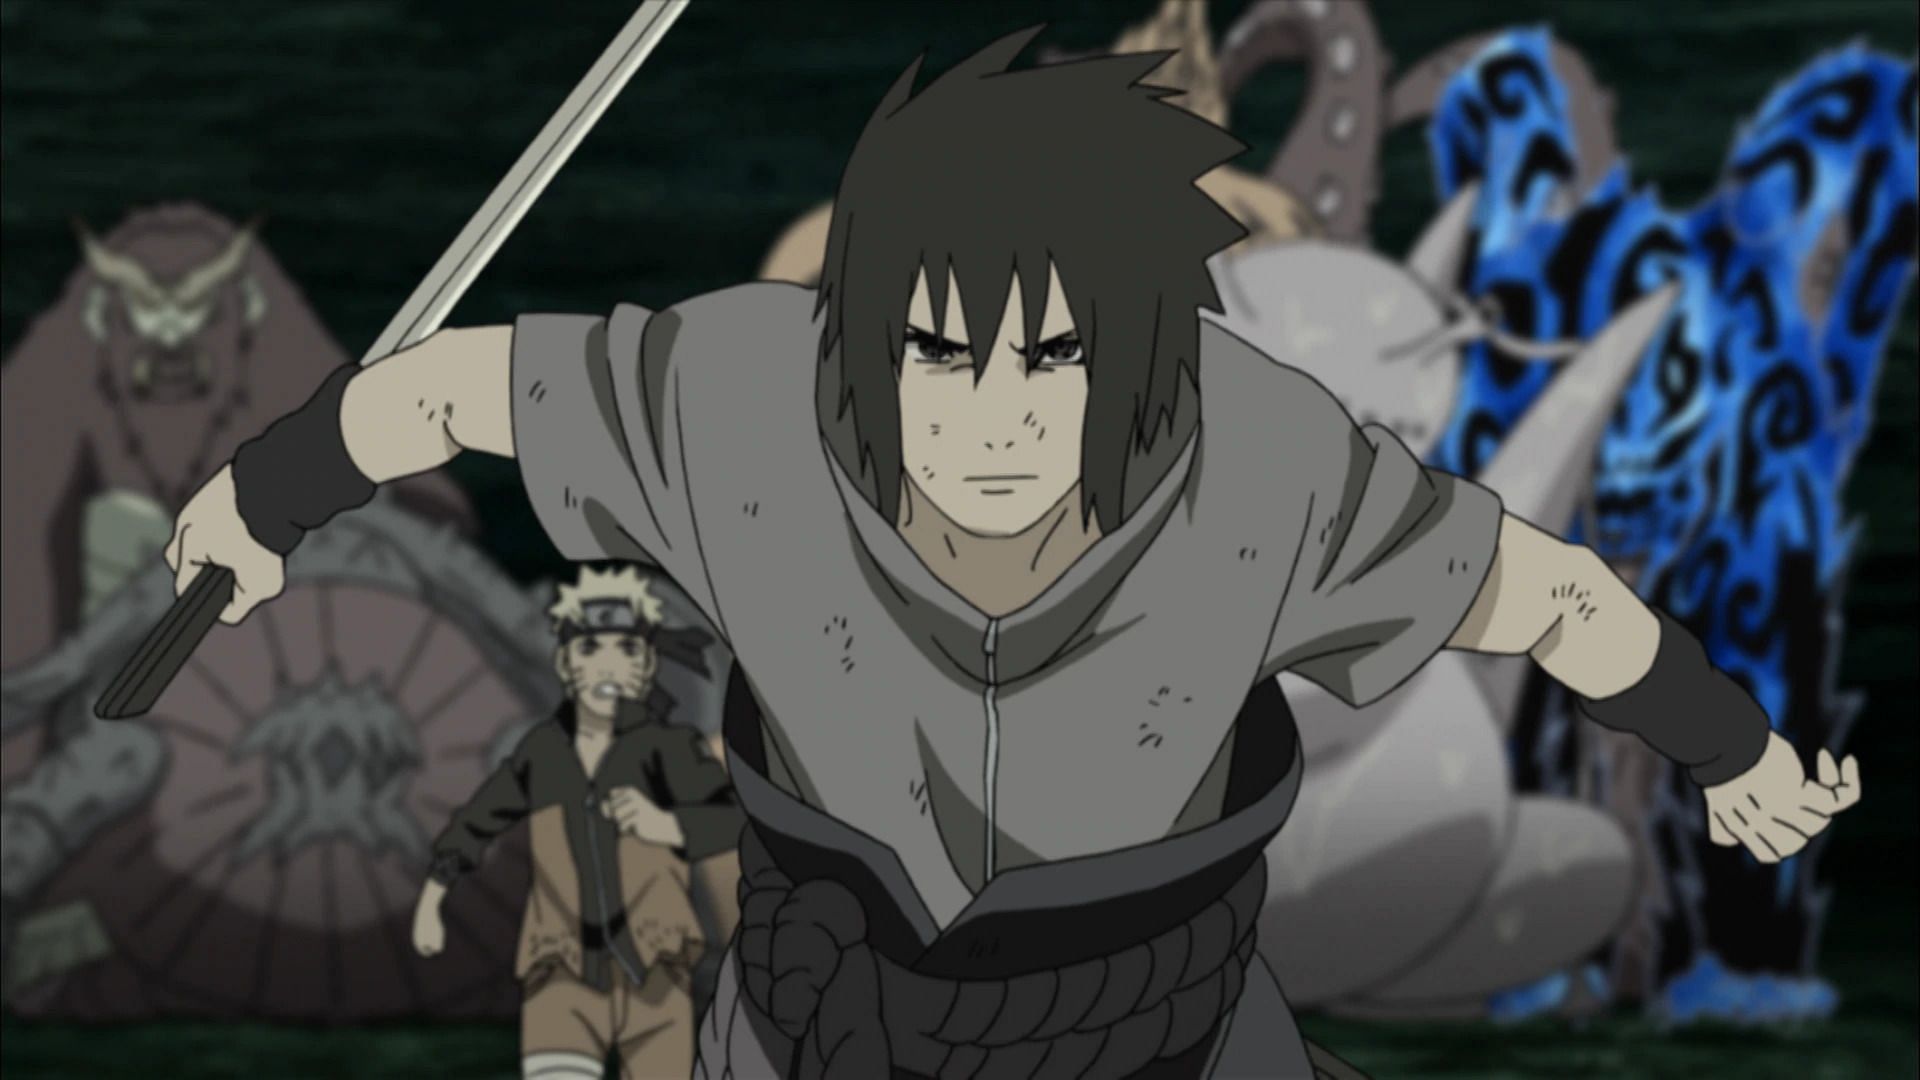 Sasuke as seen in the series (Image via Studio Pierrot)